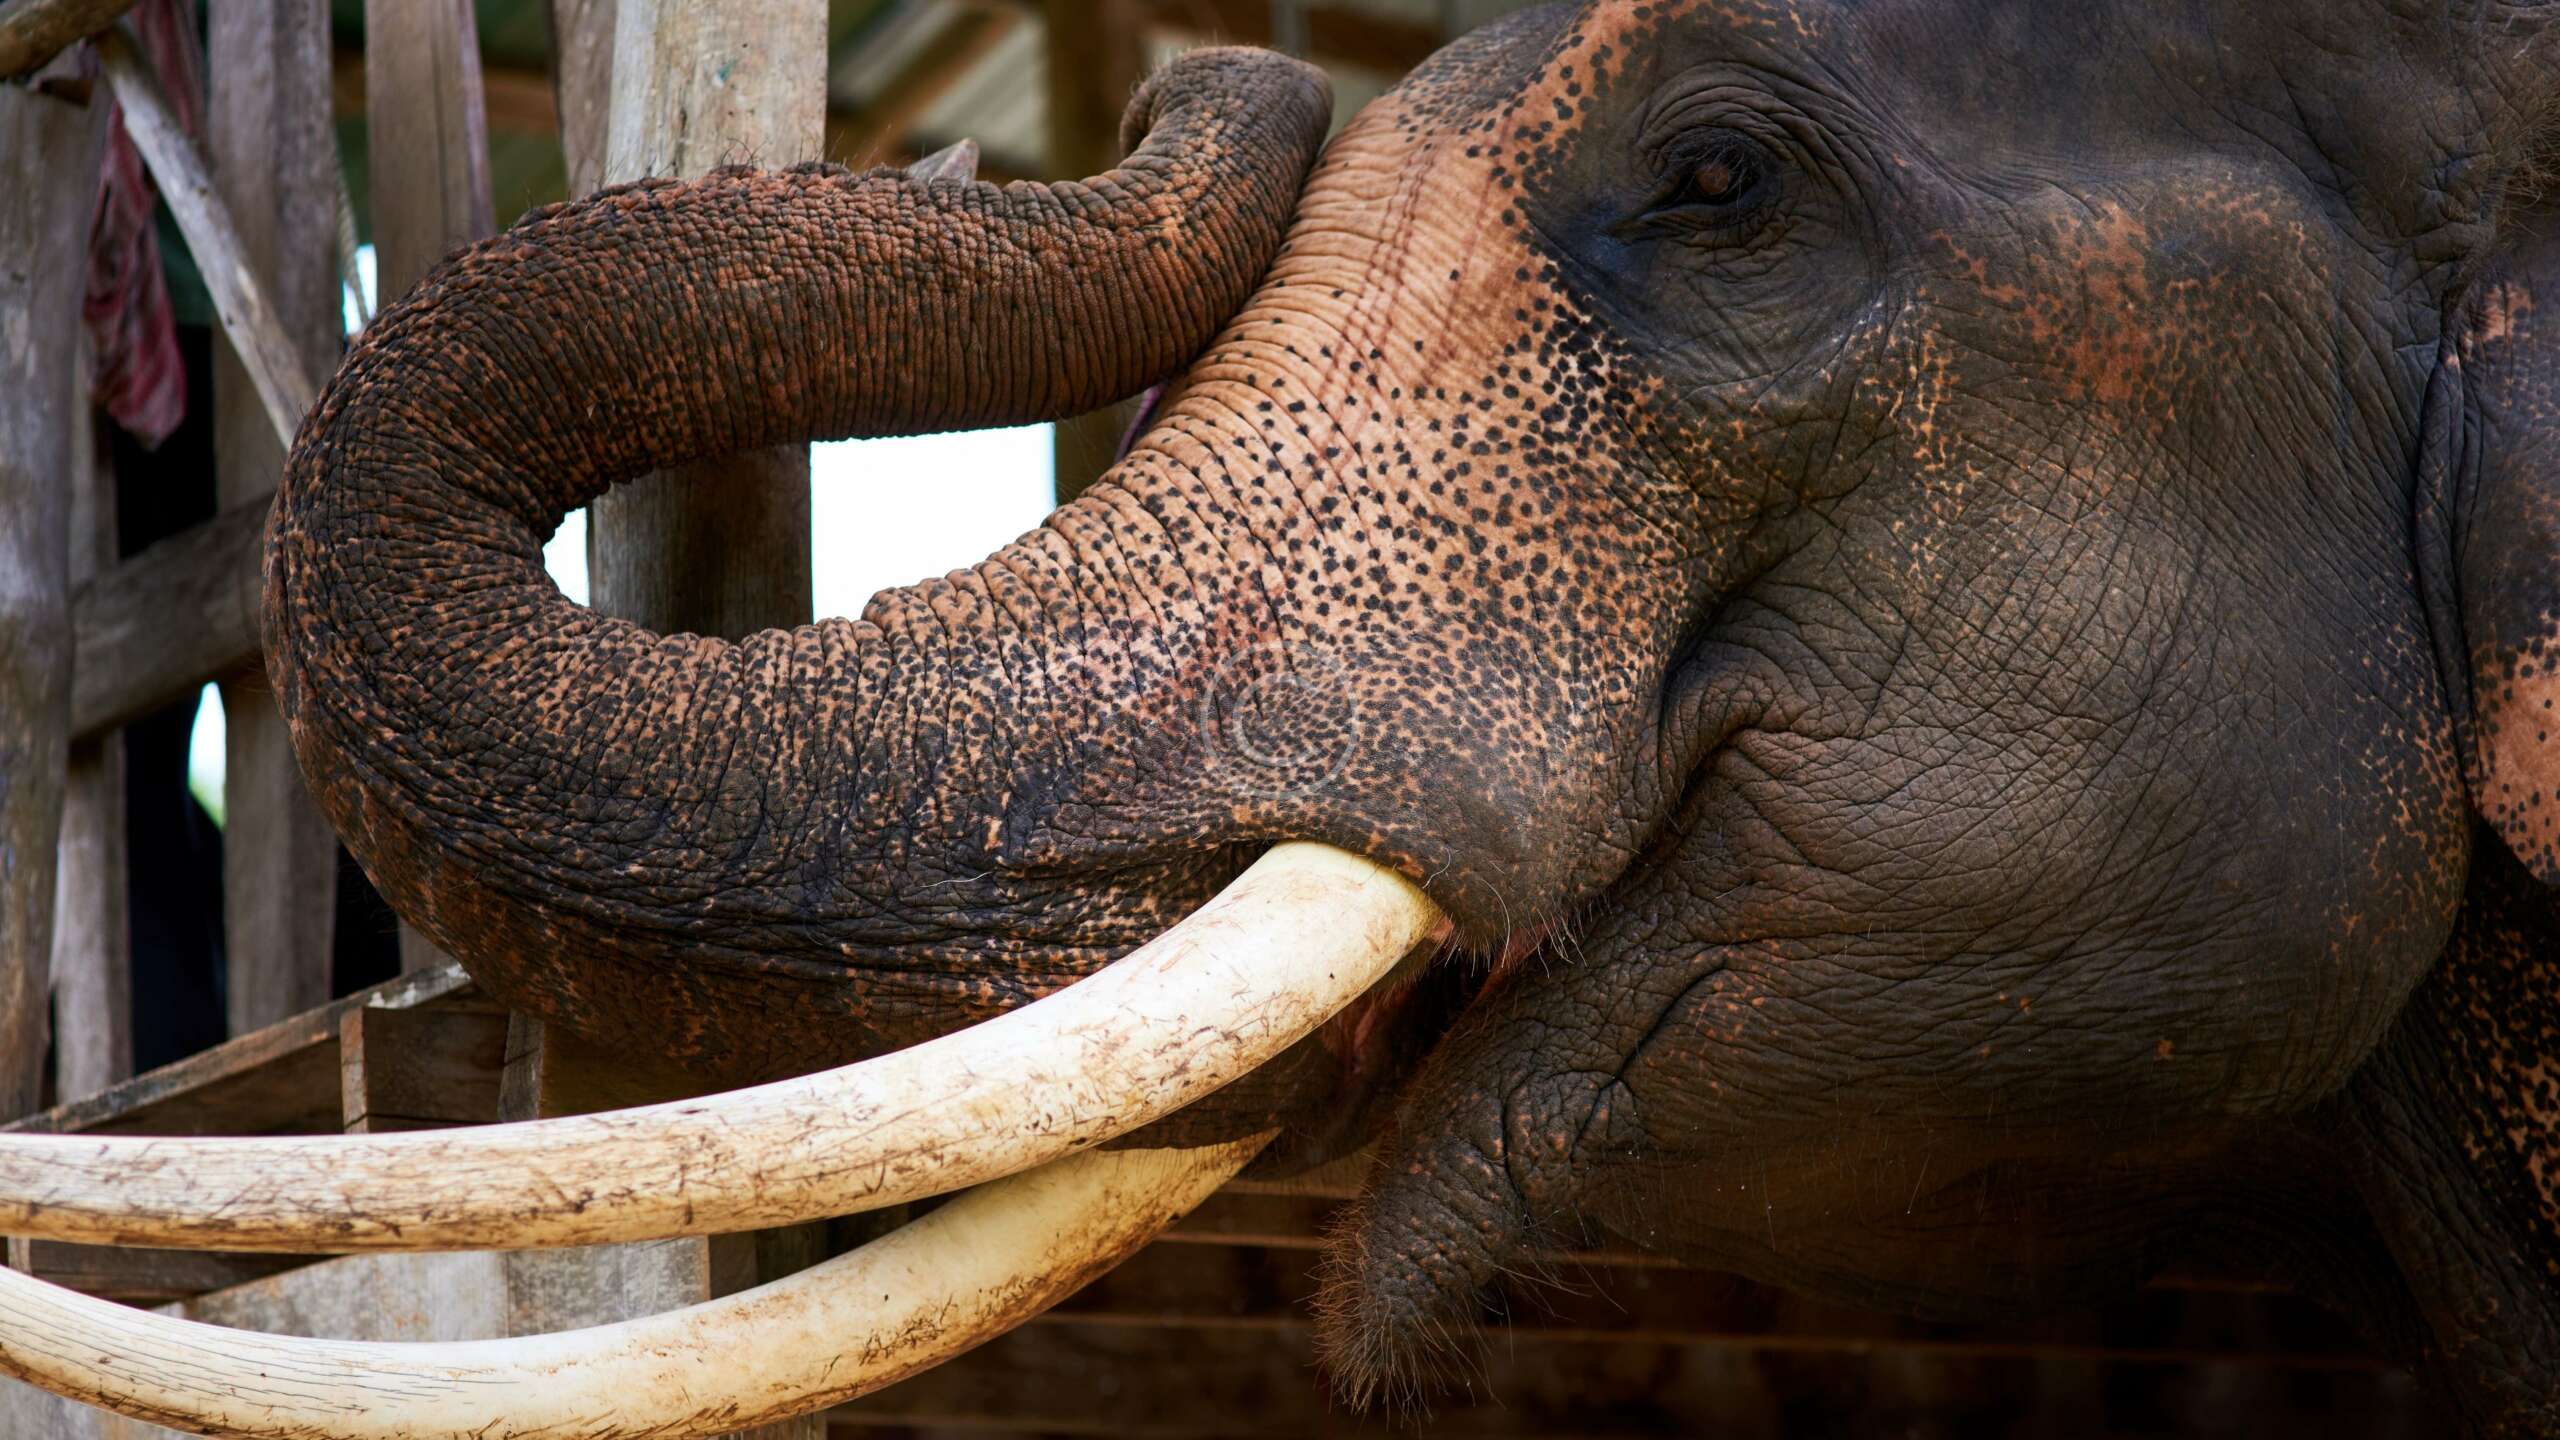 Donate for Elephants